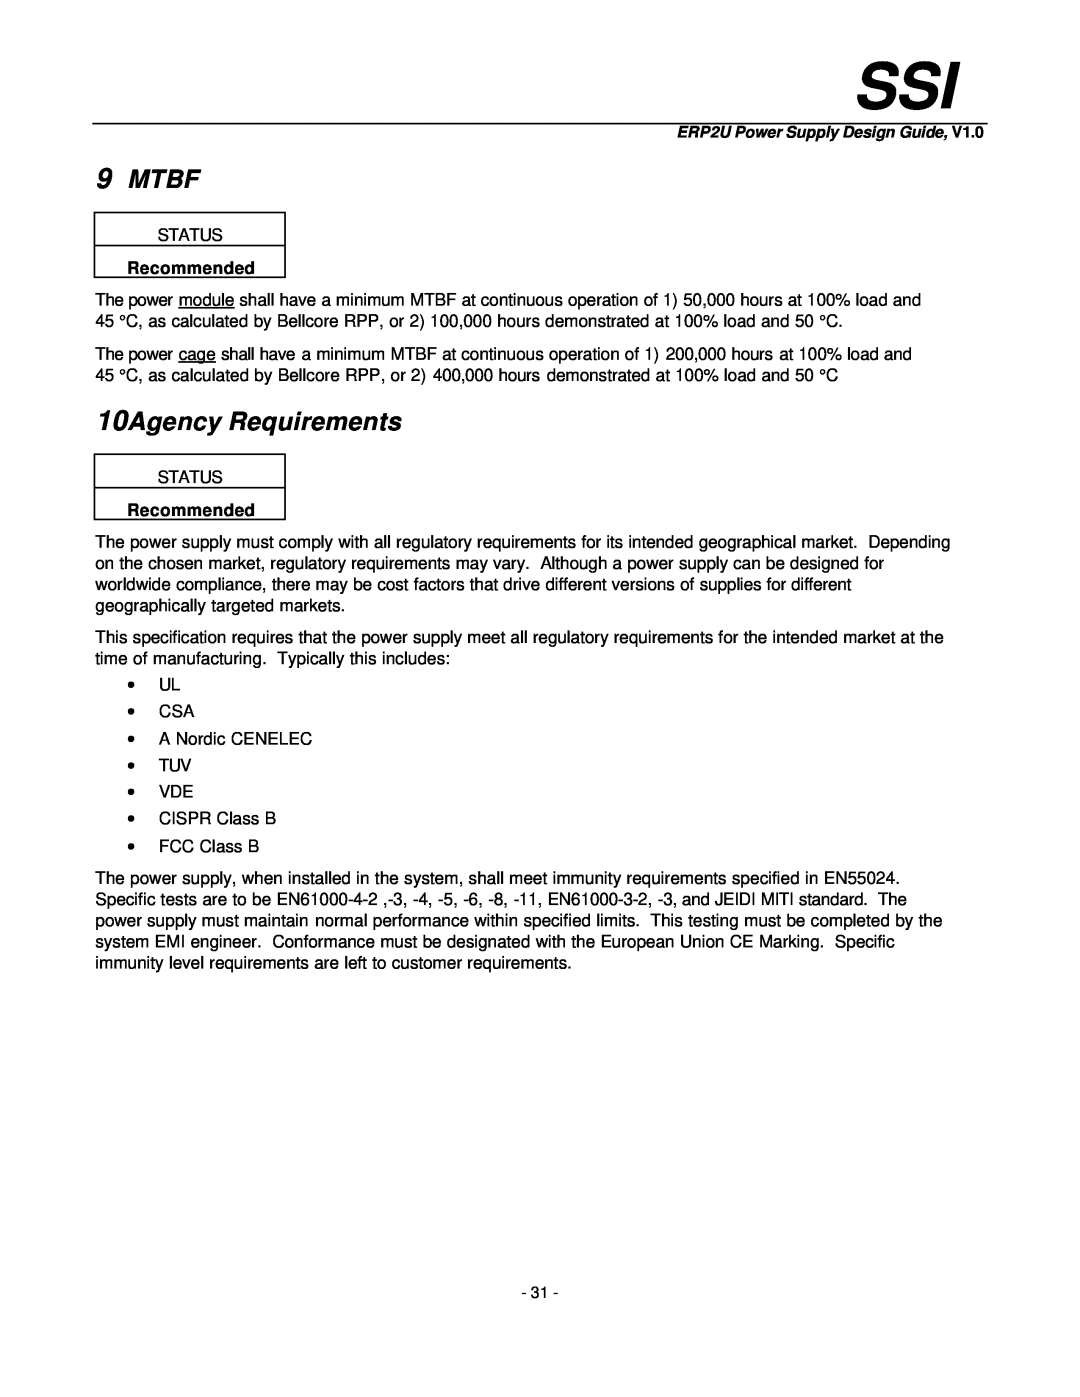 Intel ERP2U manual Mtbf, 10Agency Requirements 